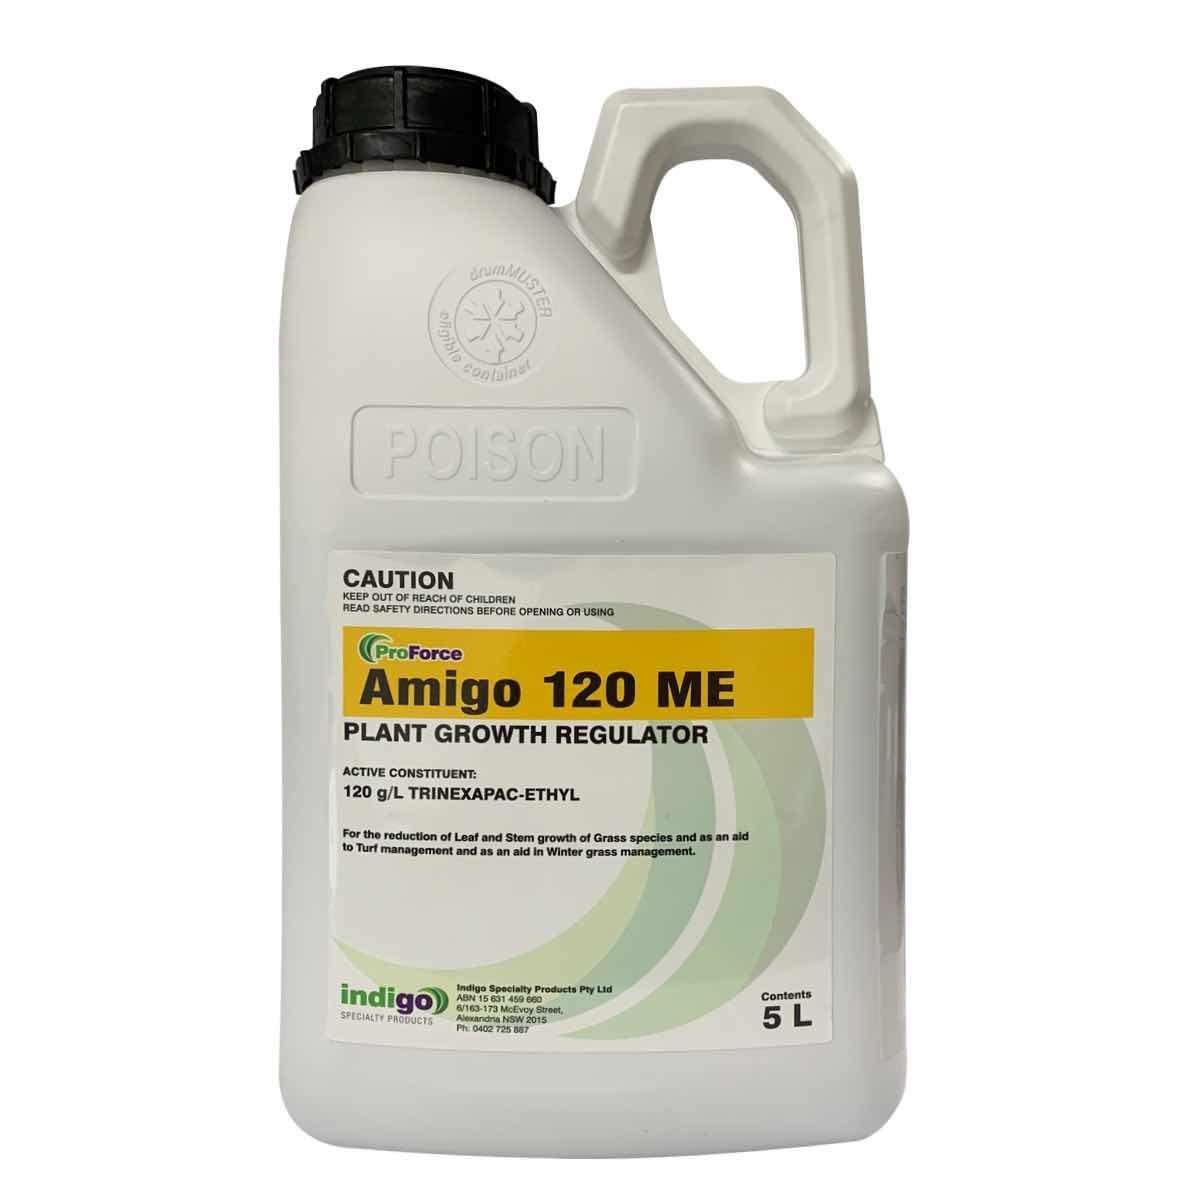 Amigo 120 is a micro emulsion formulation of trinexapac ethyl and used as a turf growth regulator.